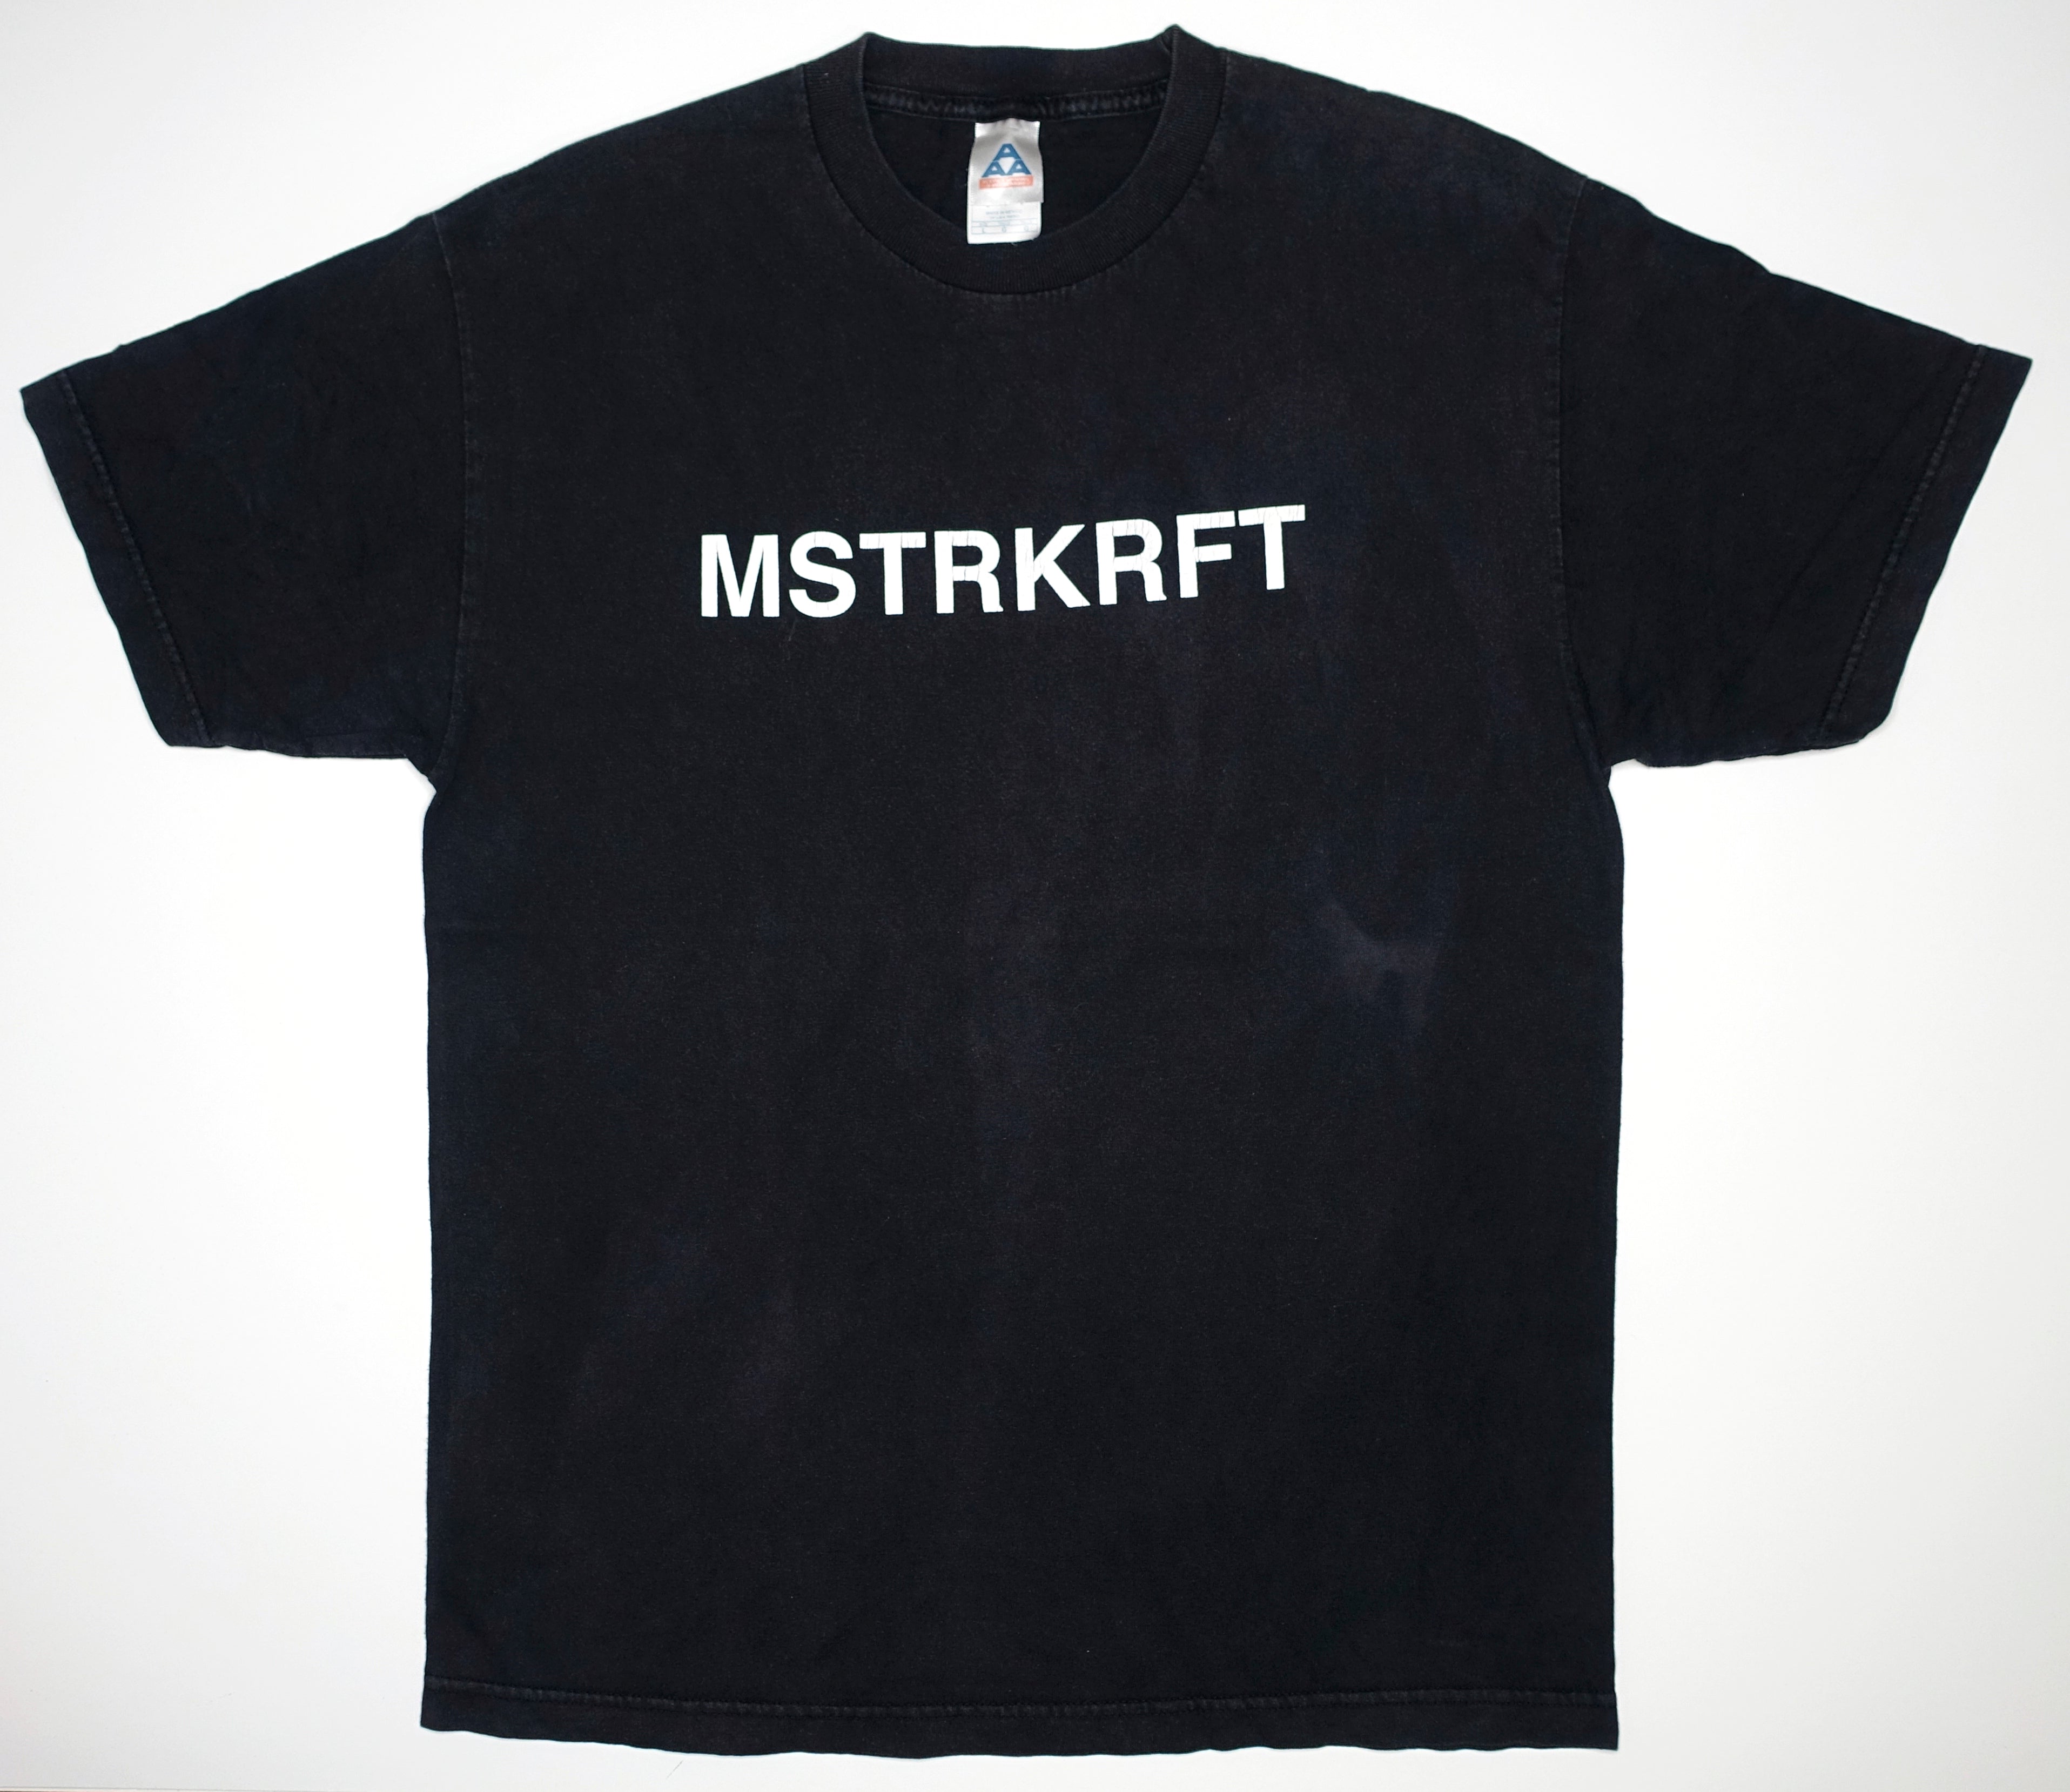 MSTRKRFT - the Look 2006 Tour Shirt Size Large